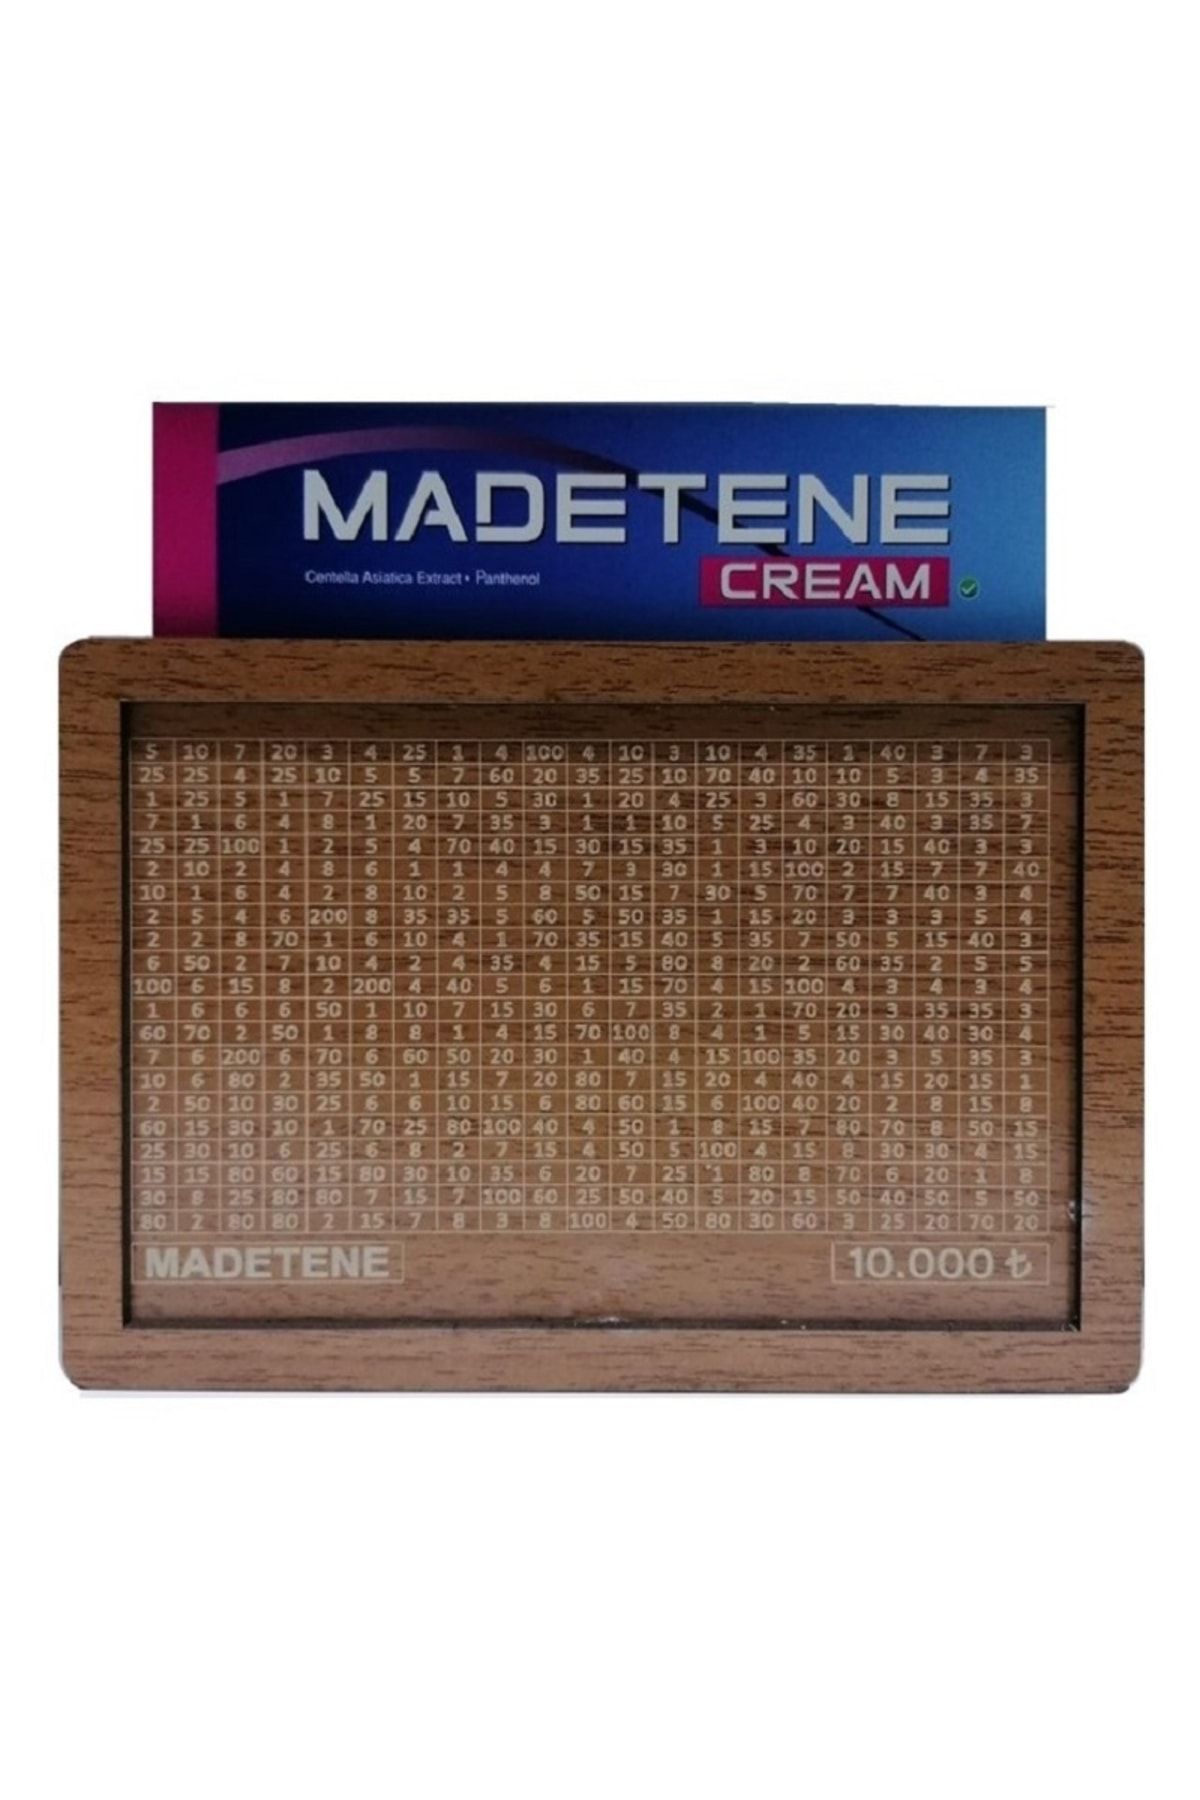 MADETENE Cream 75 Ml Cilt Yenileyici Krem (parabox - 10.000tl Kumbara Hediyeli )